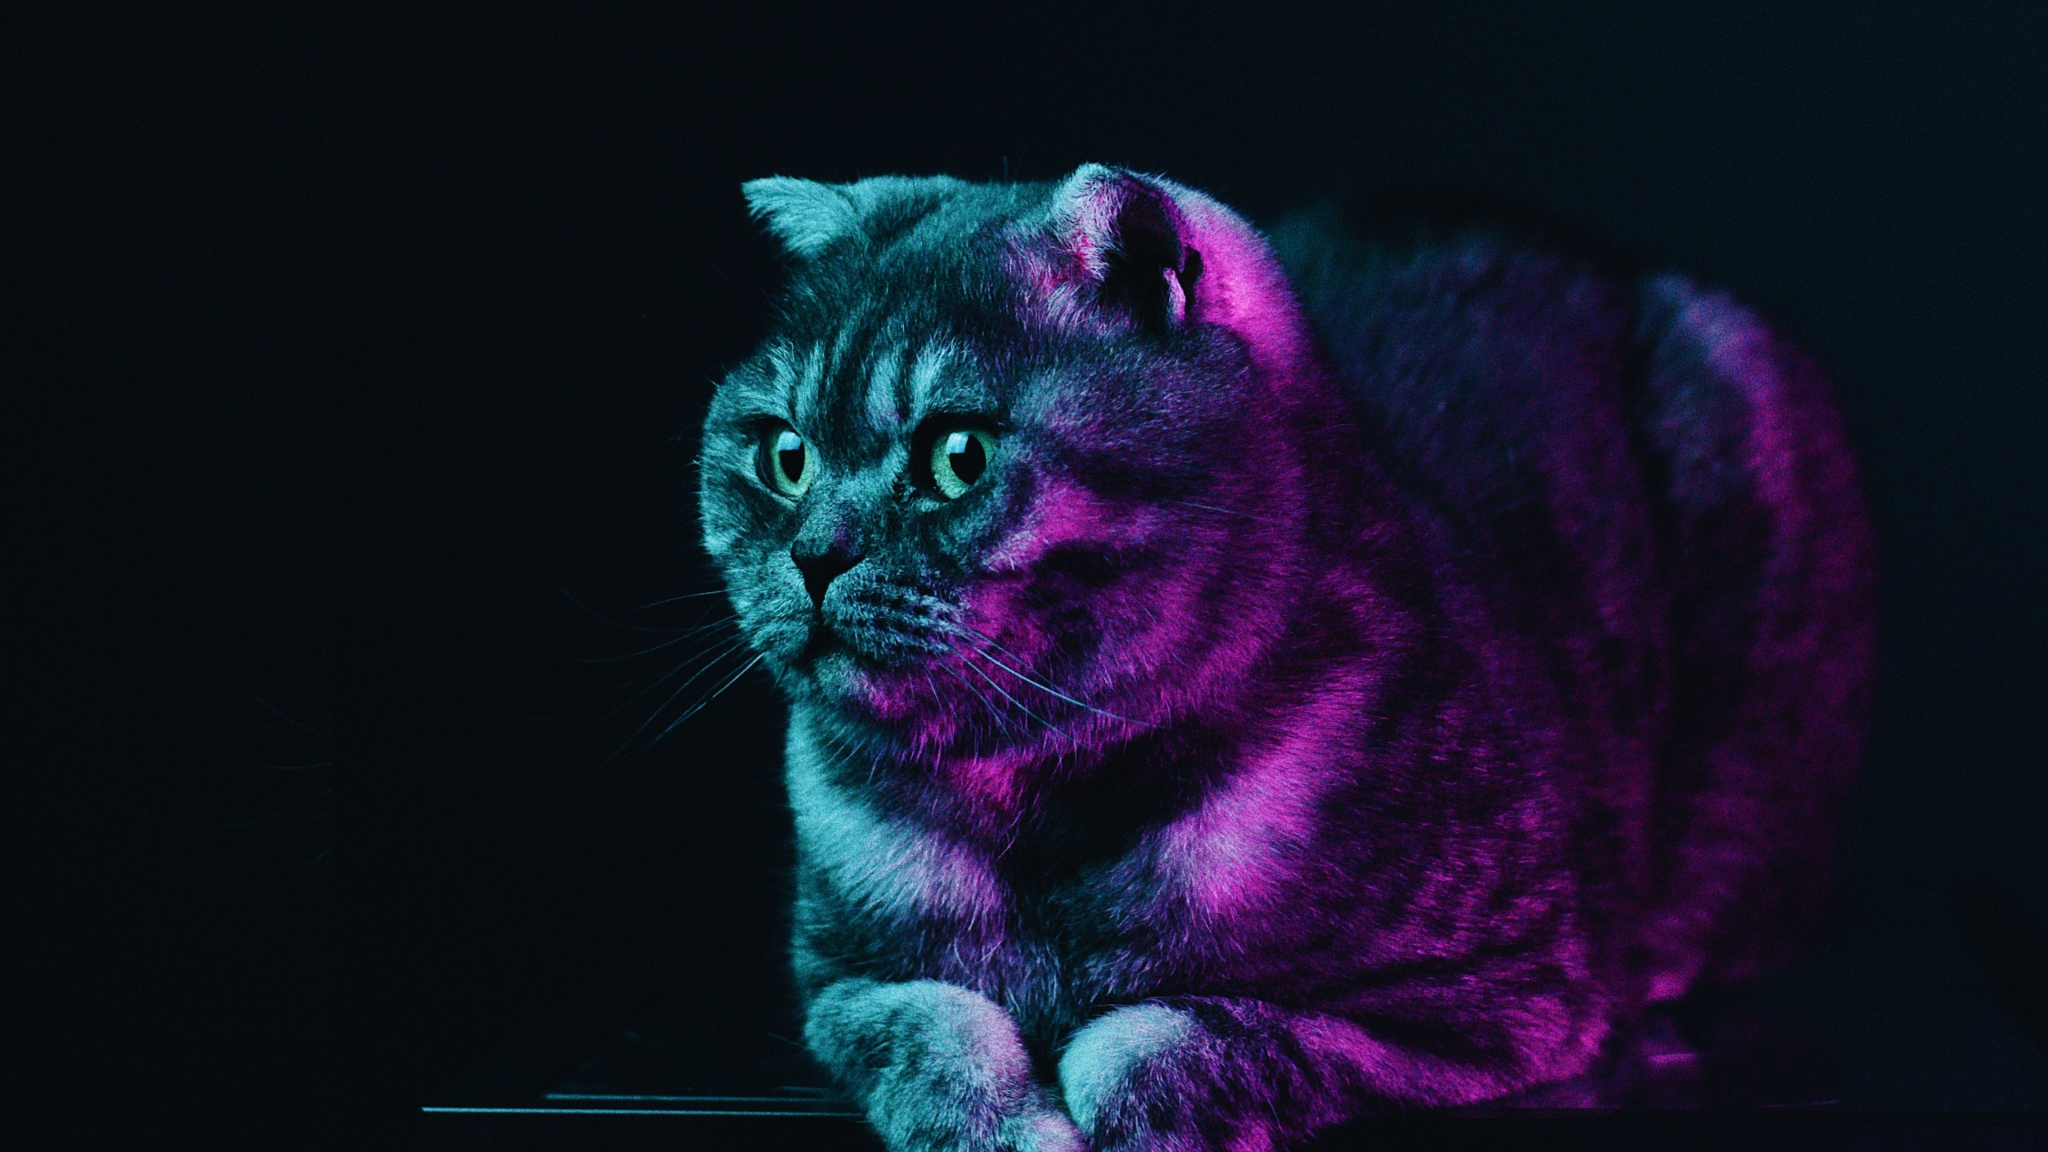 Download wallpaper 2048x1152 fat cat, neon glow, animal, dual wide  2048x1152 hd background, 24000